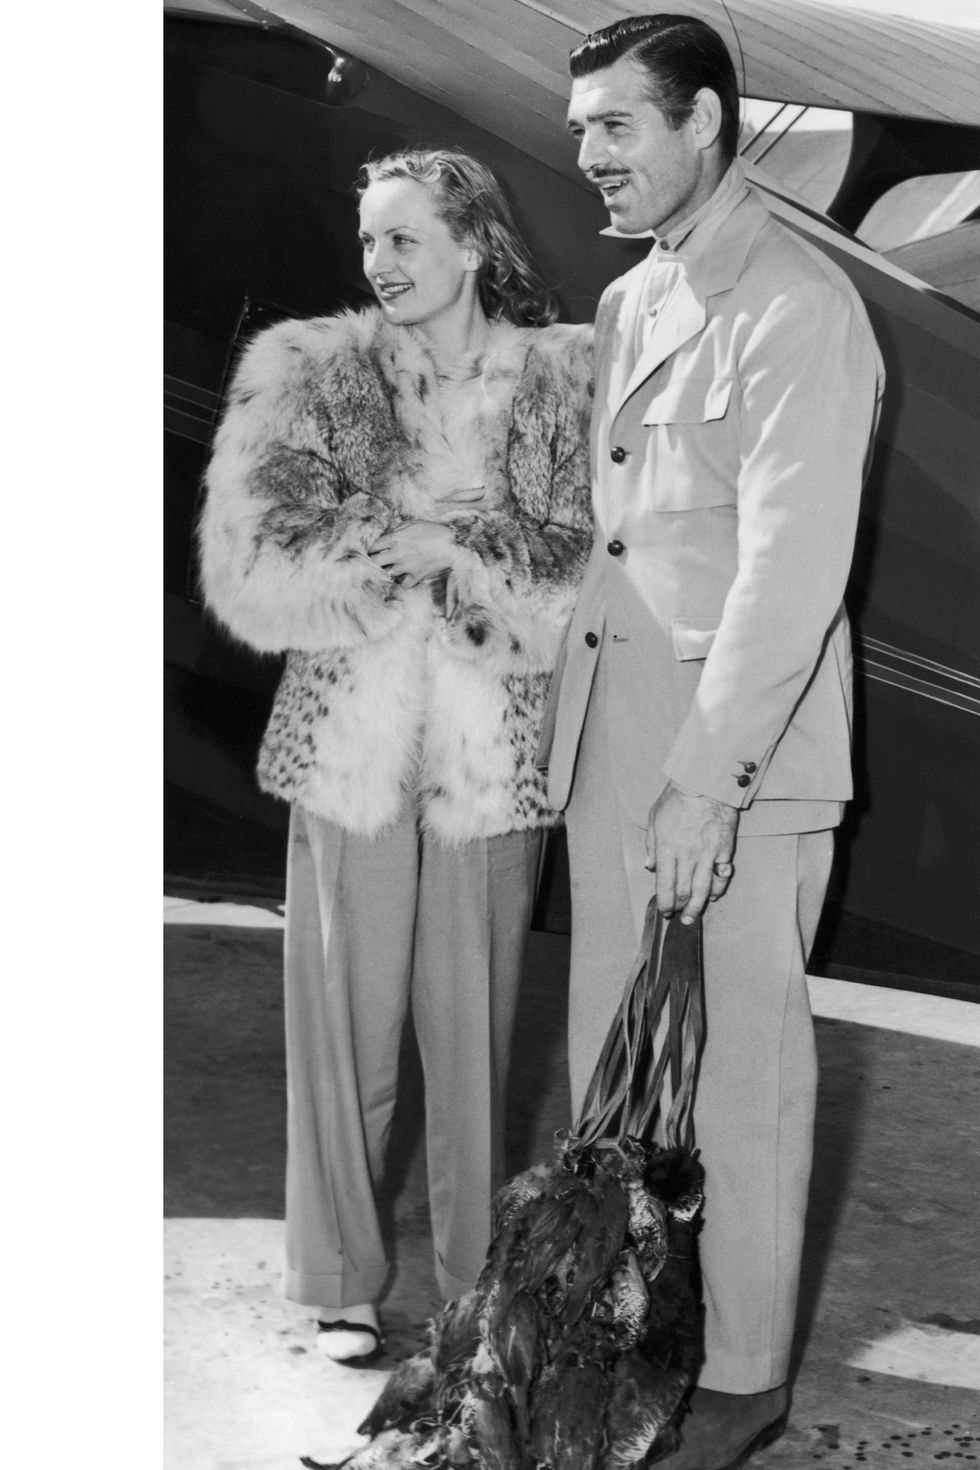 Clark GABLE and his wife Carole LOMBARD returning from a "wilderness" hike in California on June 2, 1940. Clark GABLE carries a bag made of bird feathers. As for the actress, she died two years later in a plane crash.&#xA;Le 2 juin 1940, Clark GABLE et son épouse Carole LOMBARD reviennent d'une randonnée "sauvage" en Californie. Clark GABLE porte un sac fait de plumes d'oiseau.&#xA;Quant à l'actrice, elle meurt deux ans plus tard dans un accident d'avion.